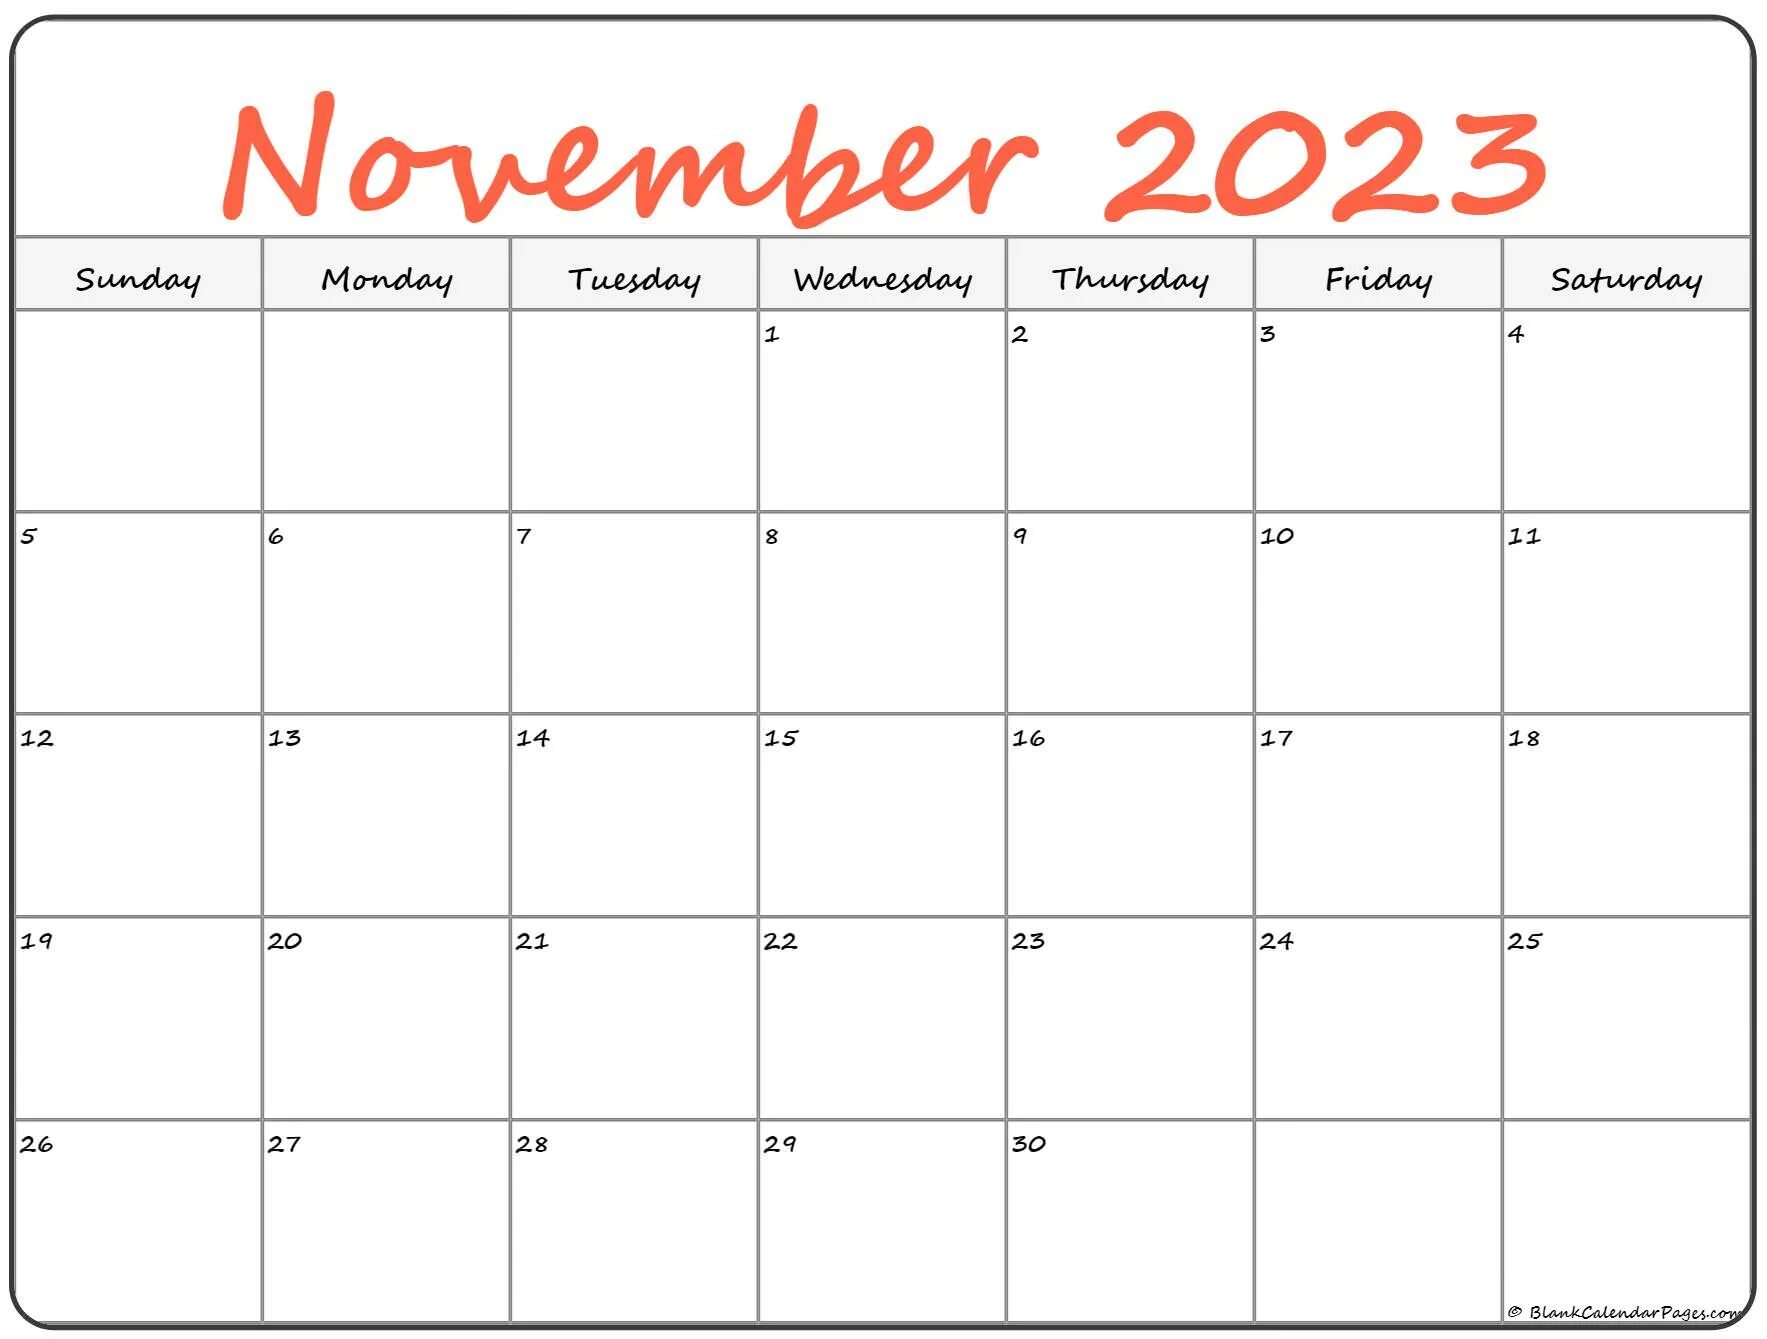 March 2022. Календарь декабрь 2022. Календарь ноябрь 2022. Календарь на март 2022 года. Математика февраль 2023